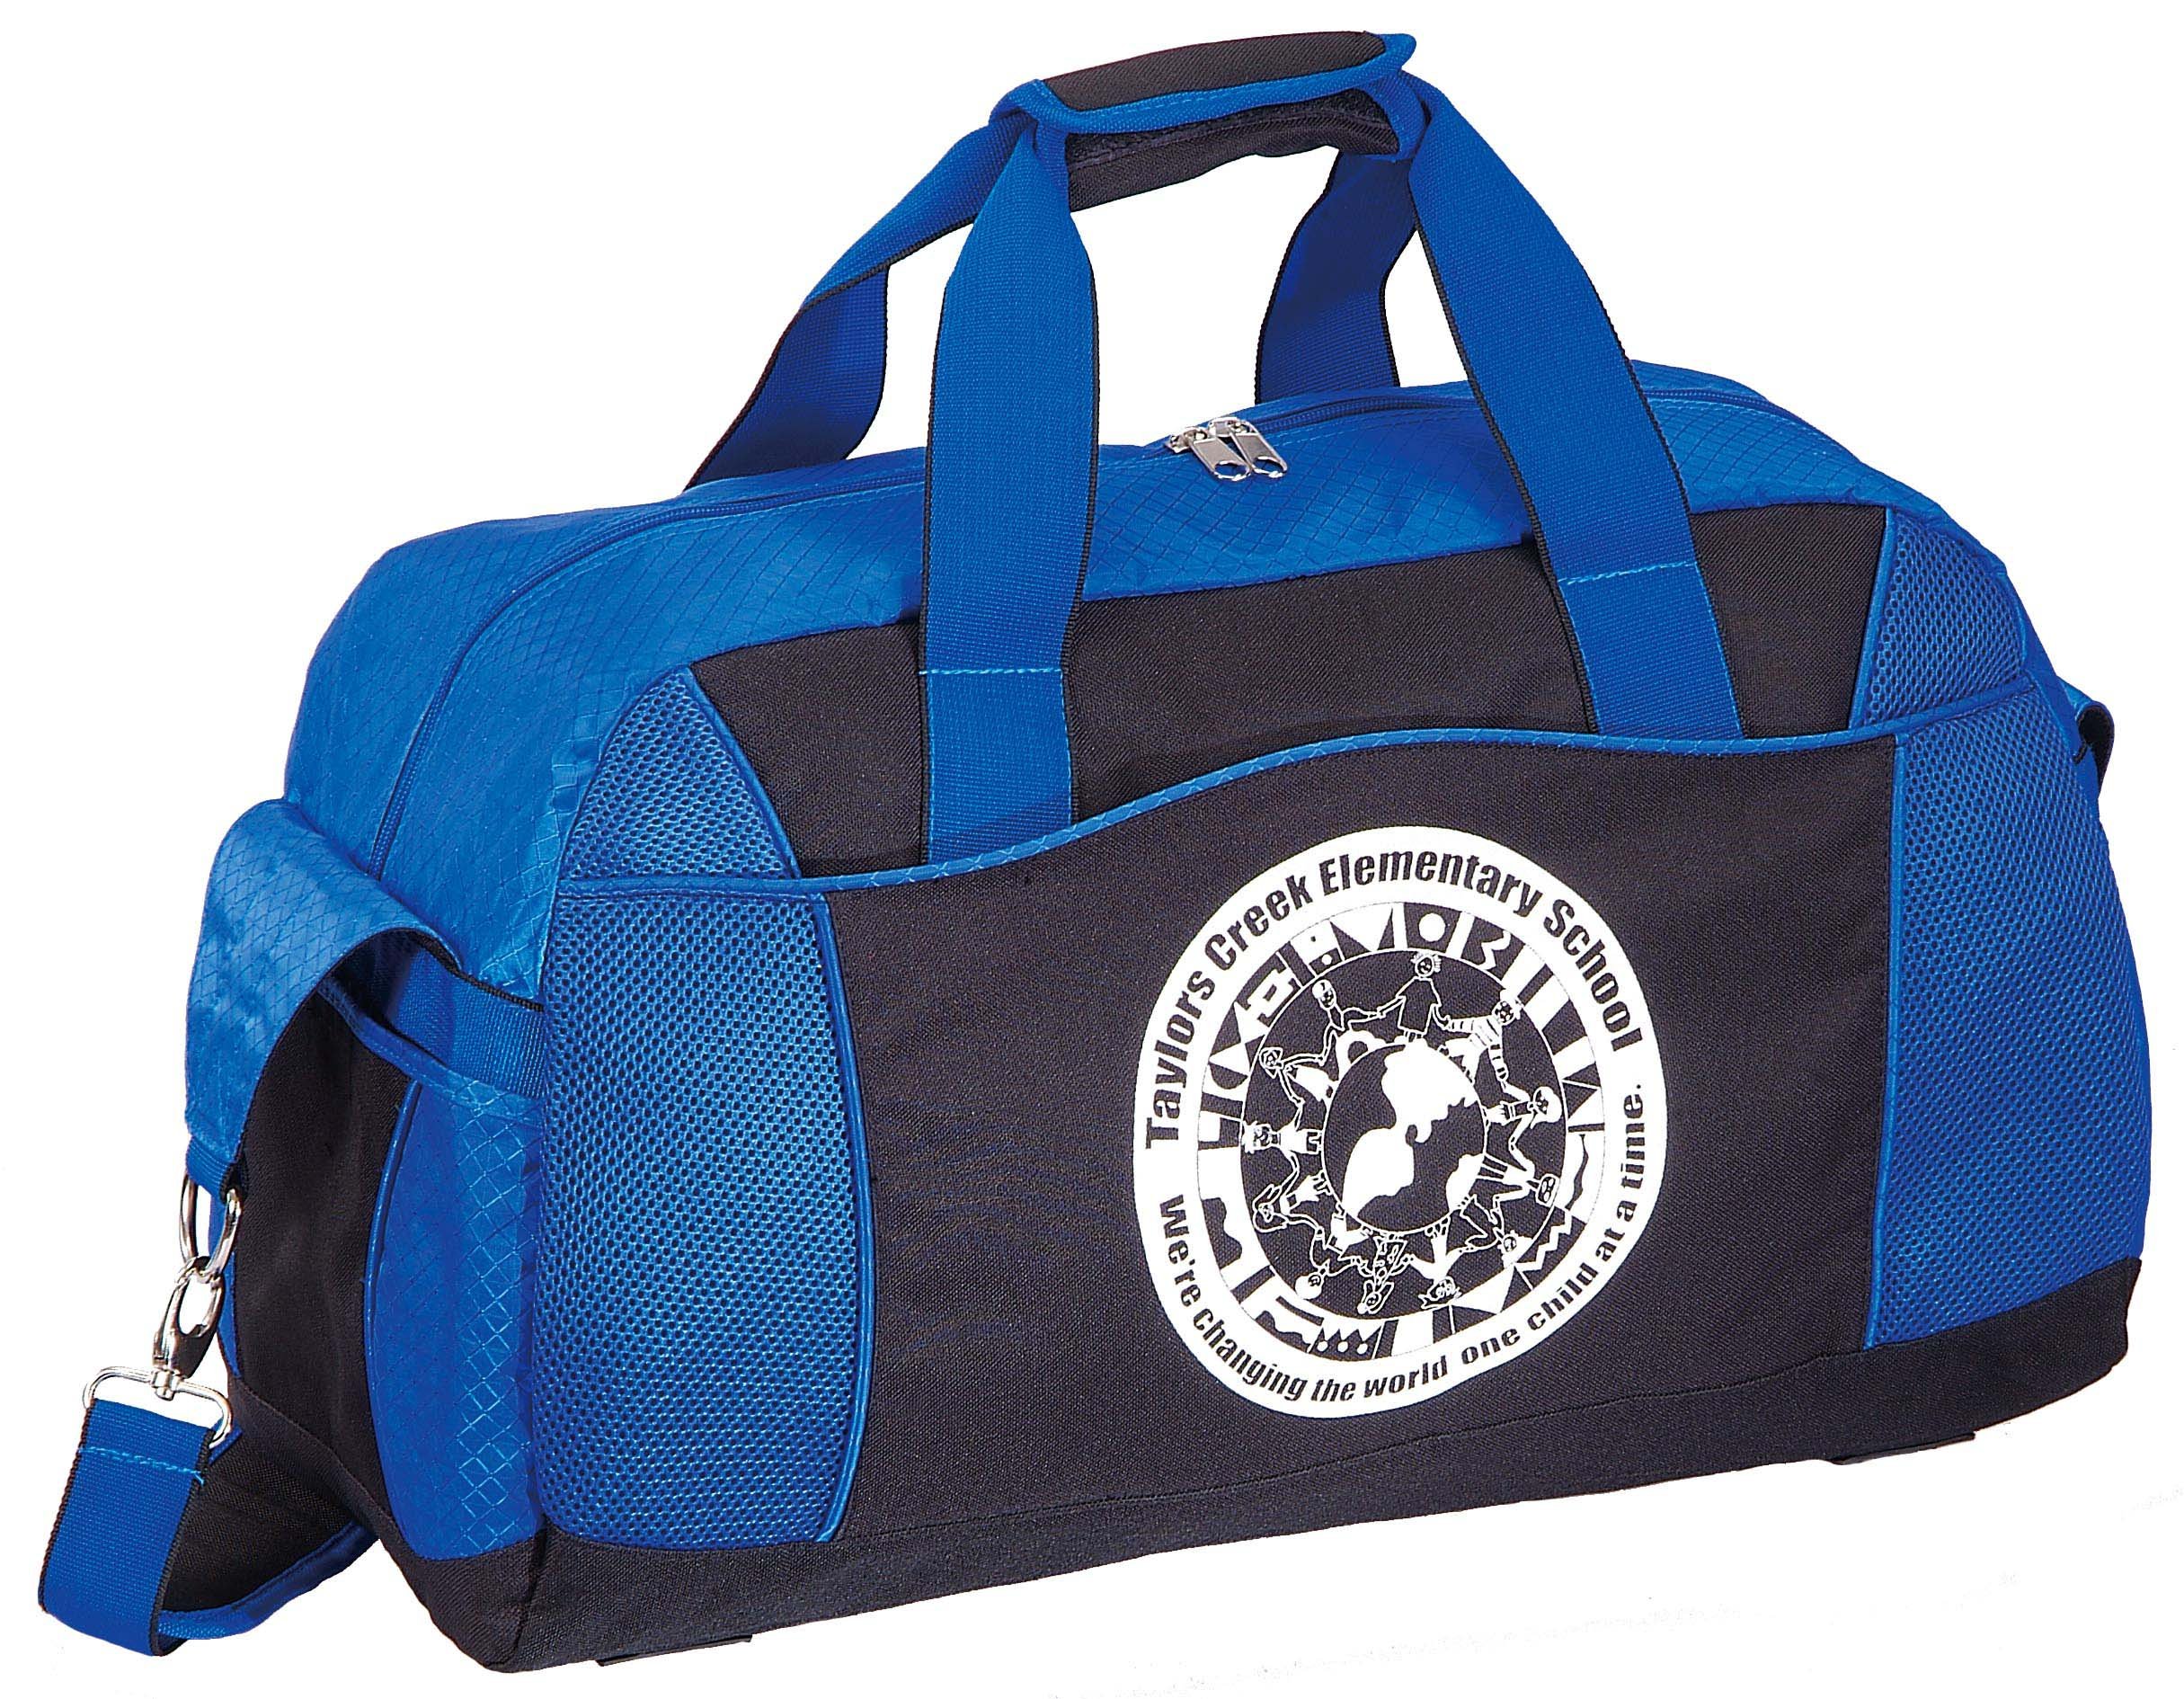 B4017 - The 21.5" Sport Duffel Bag